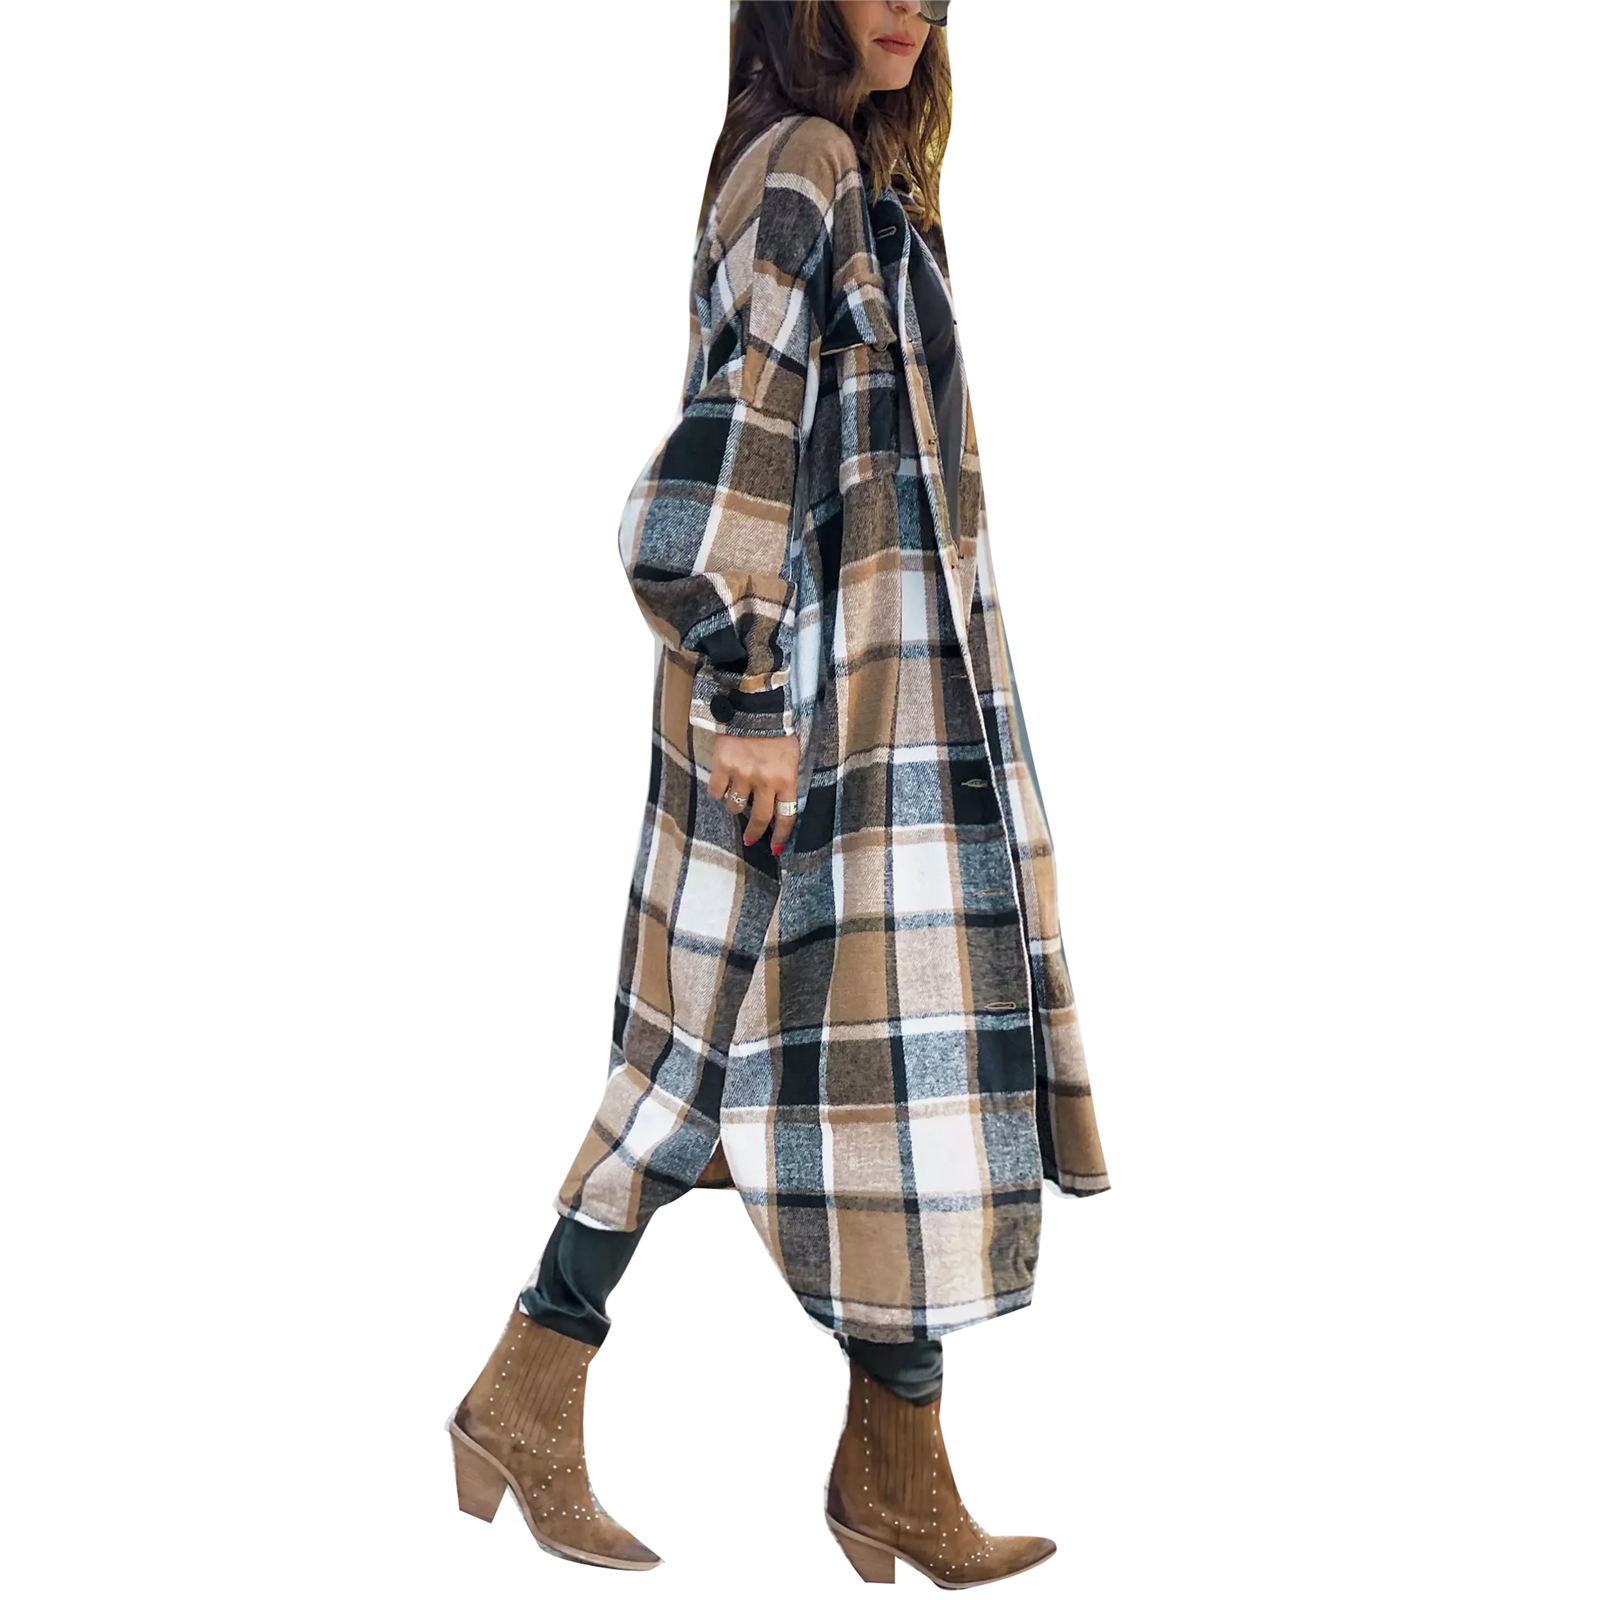 Kiapeise Female Overcoat, Plaid Turn-Down Collar Long Sleeve Woolen Coat for Women - image 2 of 6